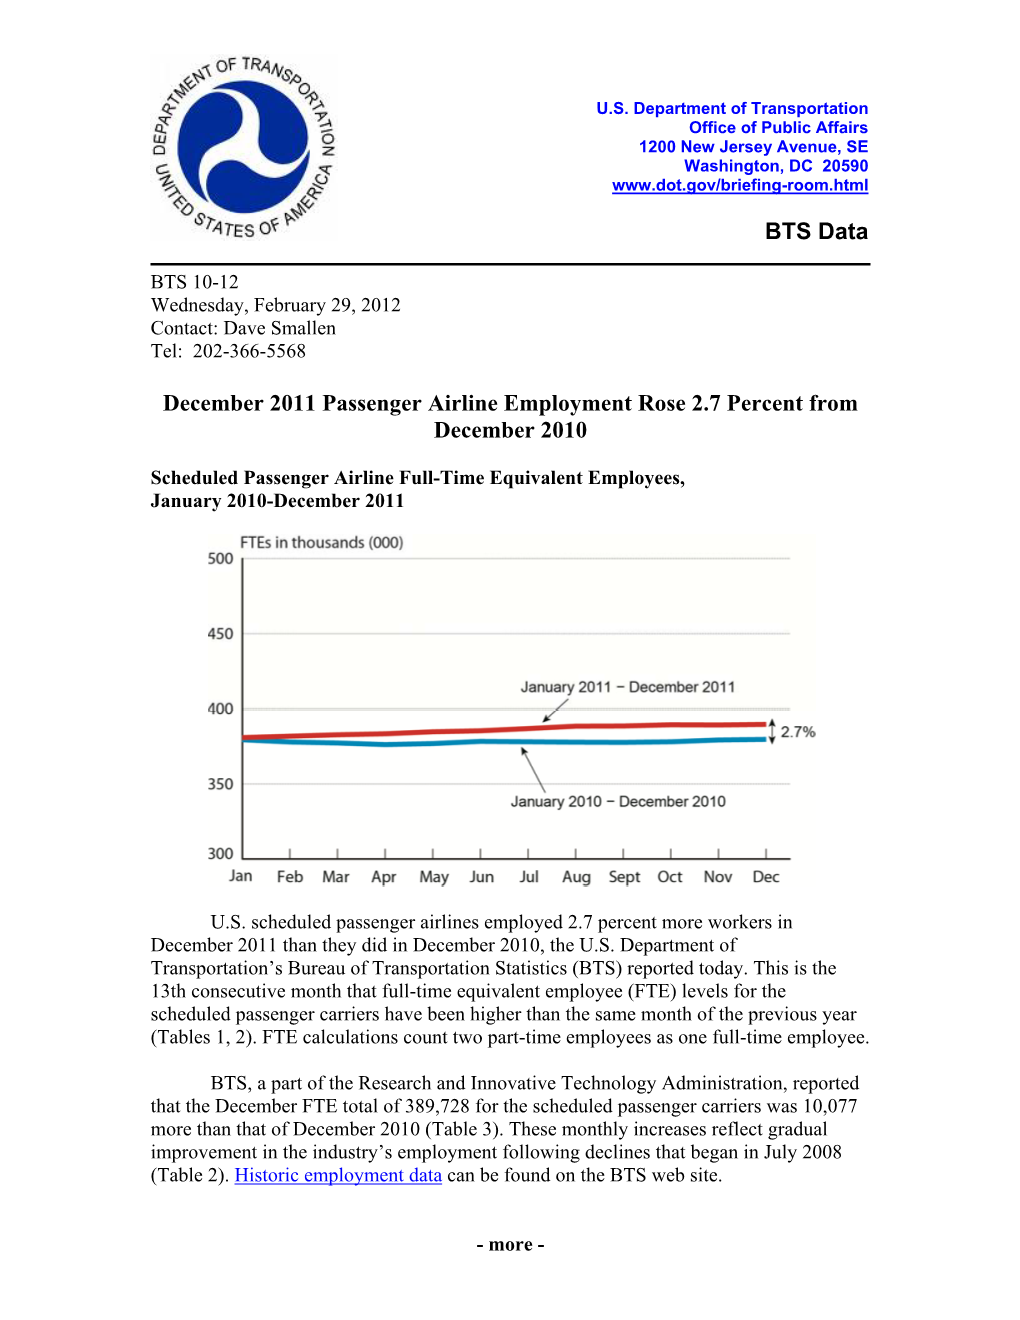 December 2011 Passenger Airline Employment Rose 2.7 Percent from December 2010